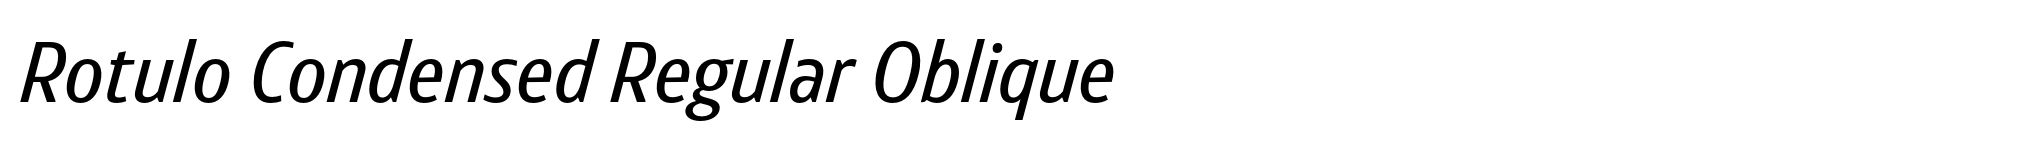 Rotulo Condensed Regular Oblique image